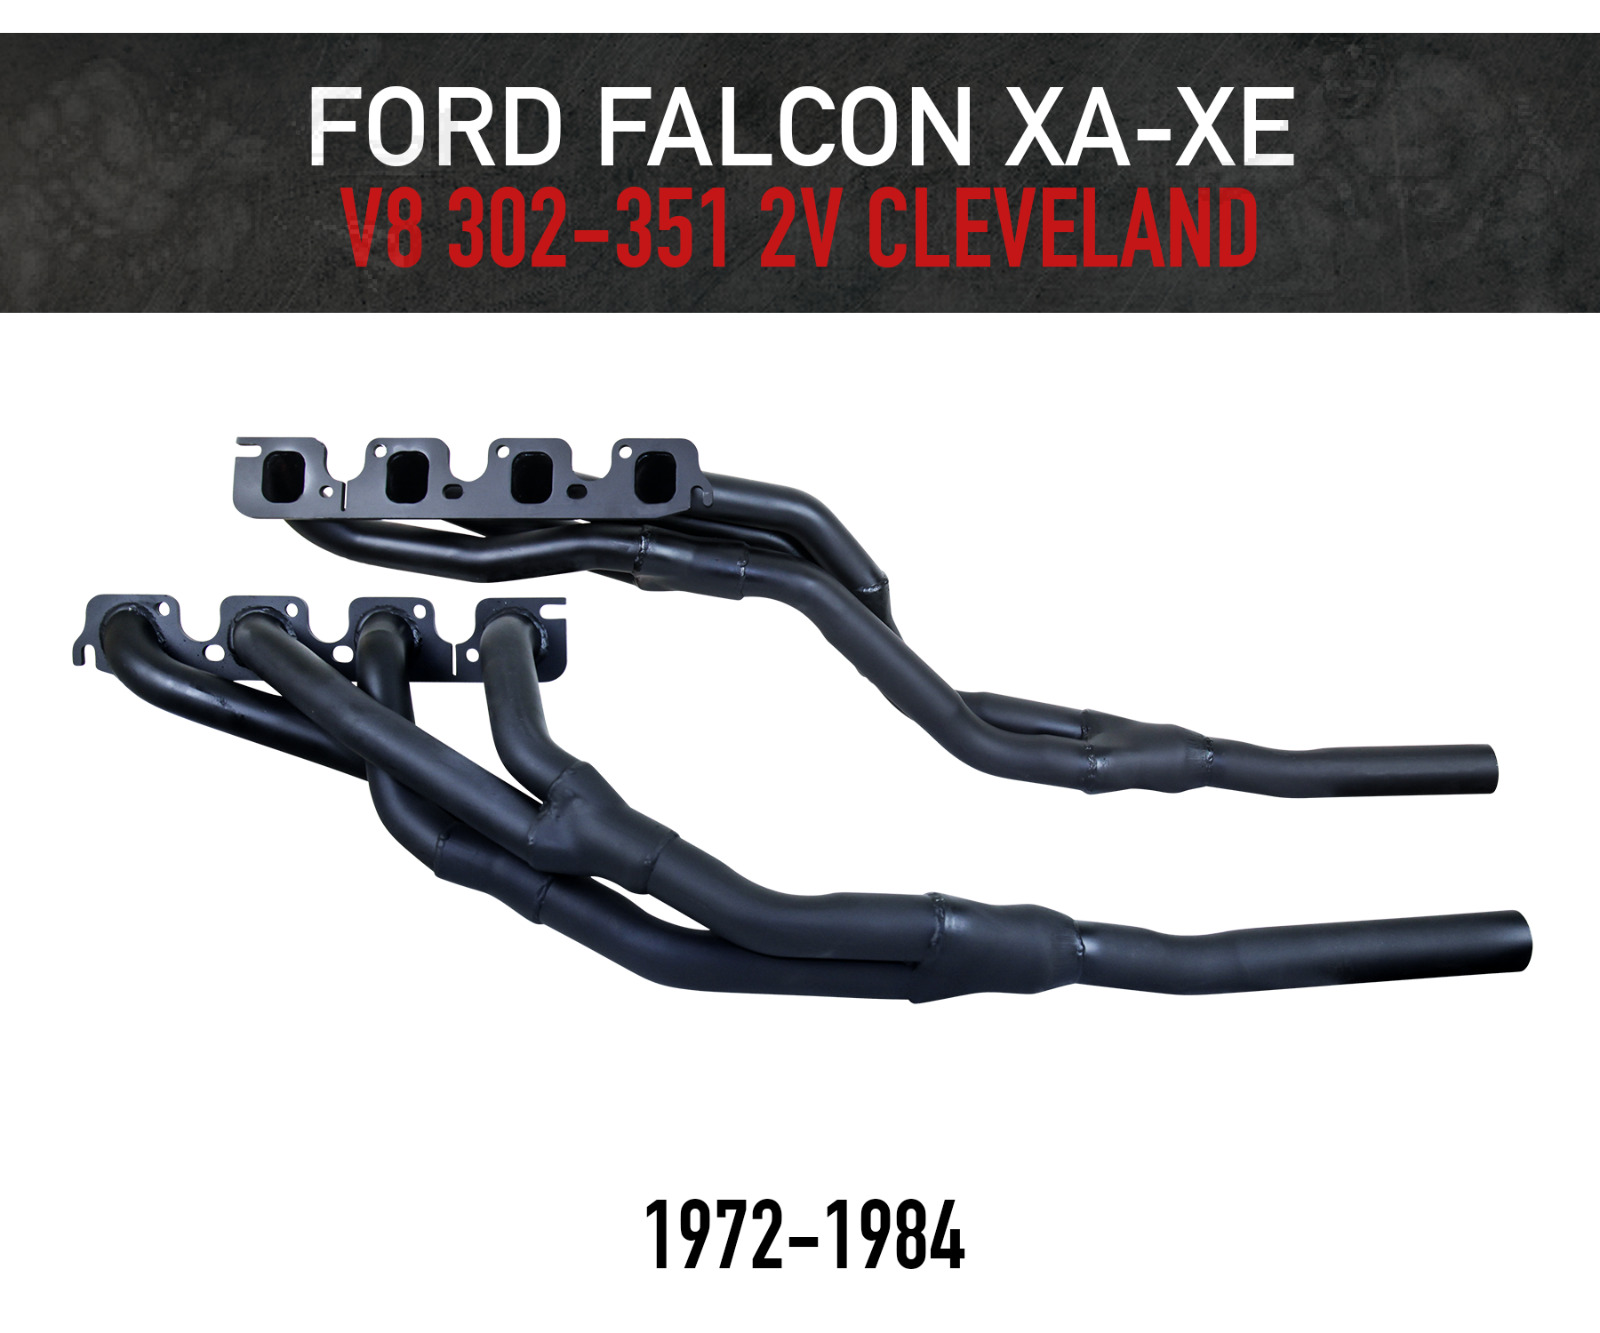 Headers / Extractors for Ford Falcon XA-XE V8 302-351 2V Cleveland (1972-1984)